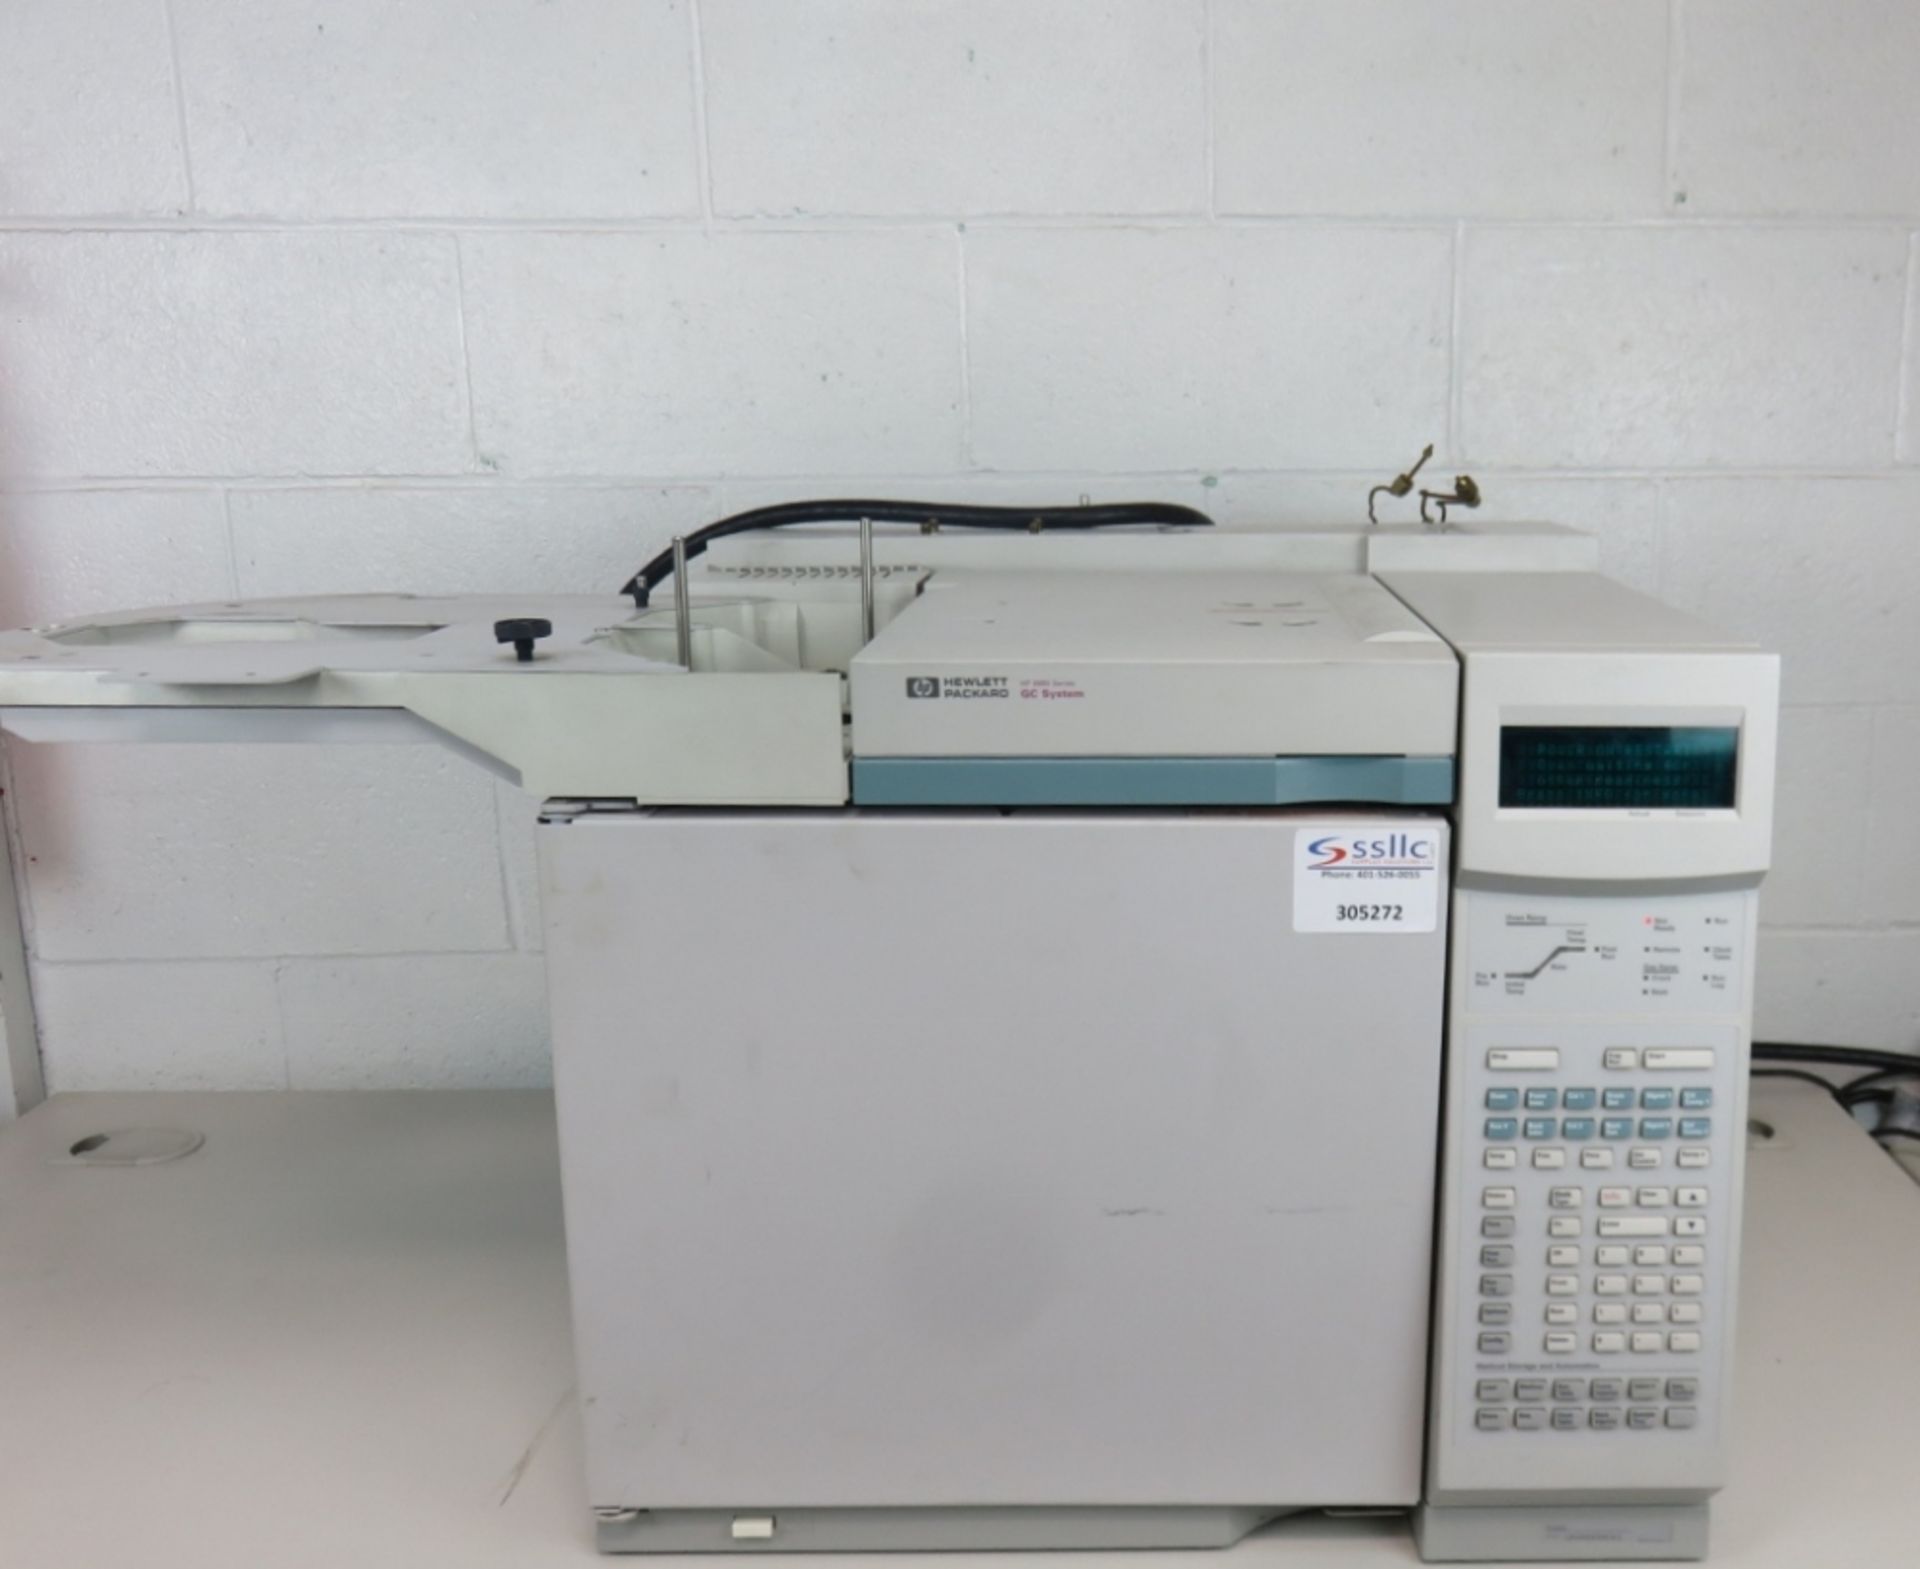 HP 6890 Gas Chromatograph